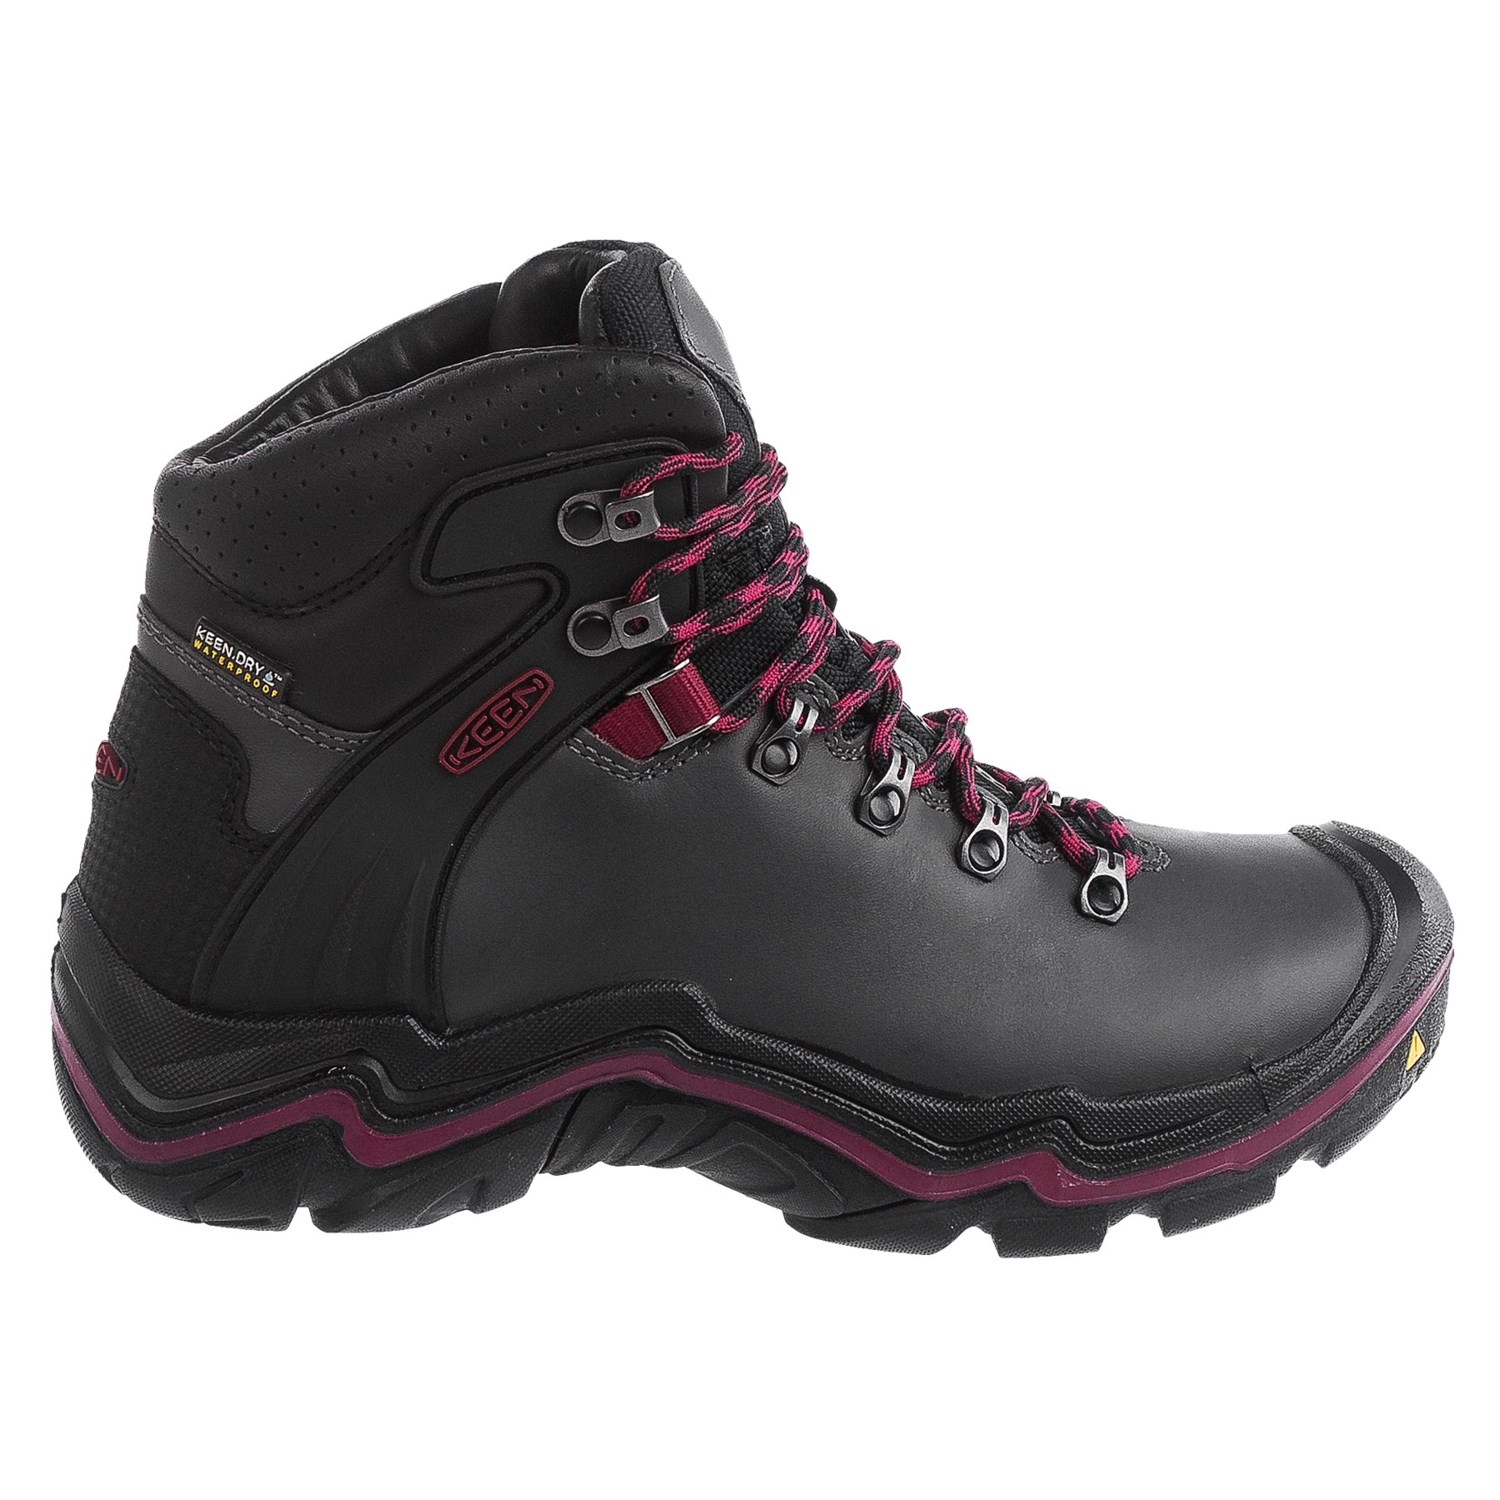 Keen Liberty Ridge Hiking Boots (For Women) - Save 60%